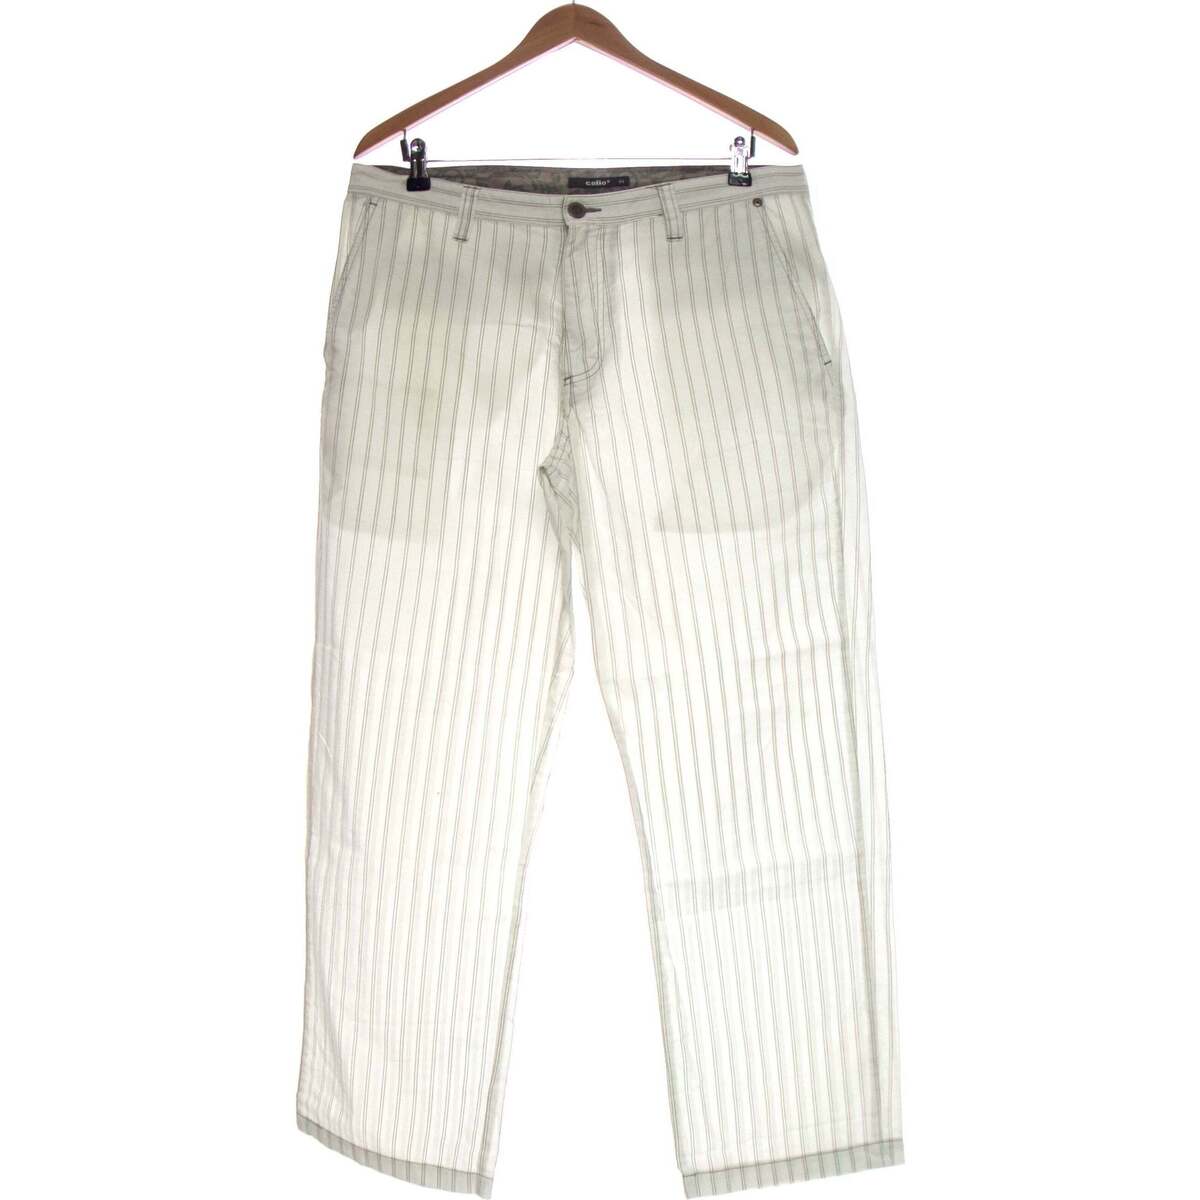 Vêtements Homme Pantalons Celio 44 - T5 - XL/XXL Blanc